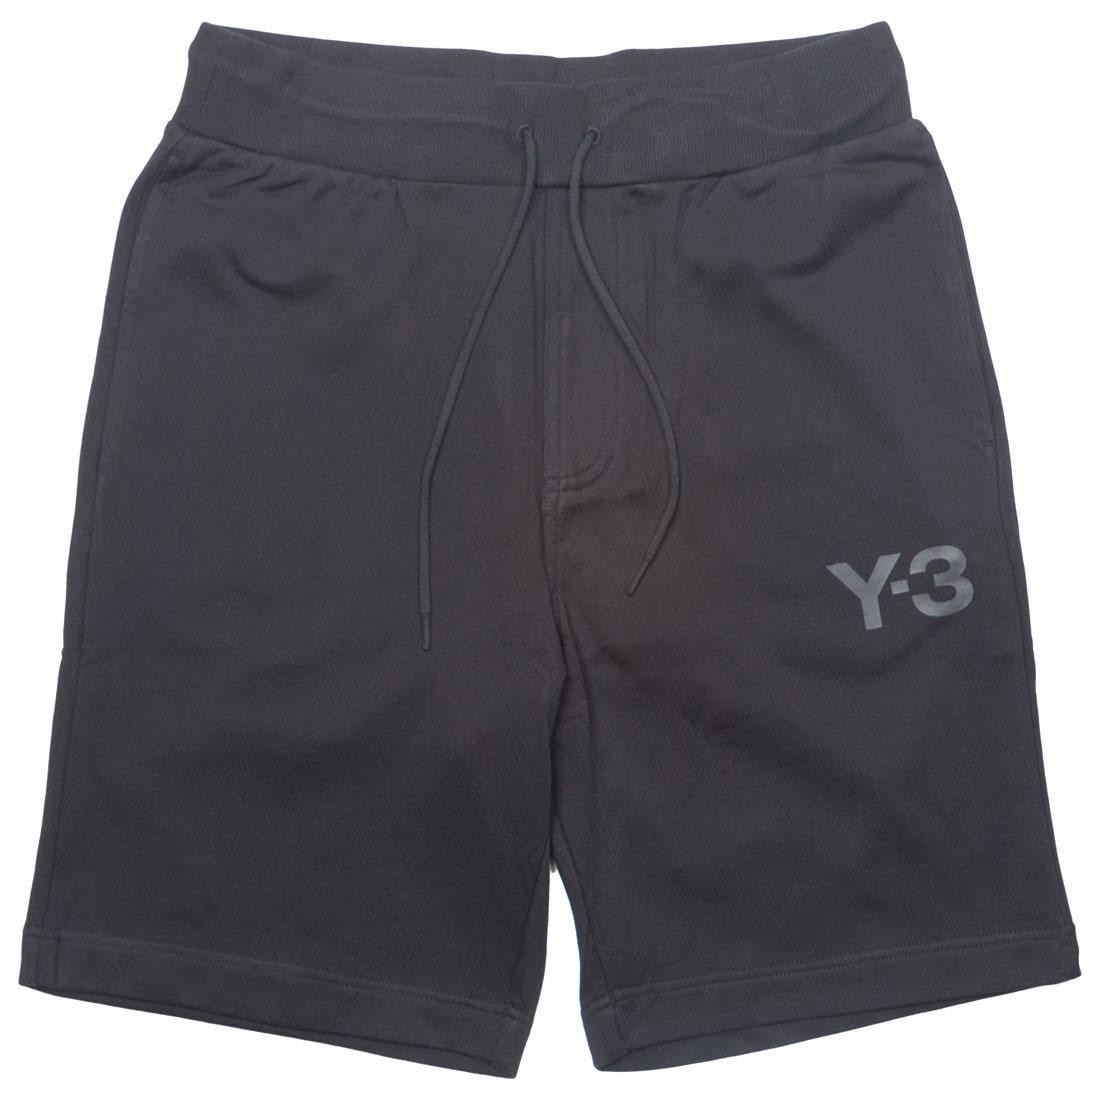 Adidas Y-3 Men Classic Shorts (black)